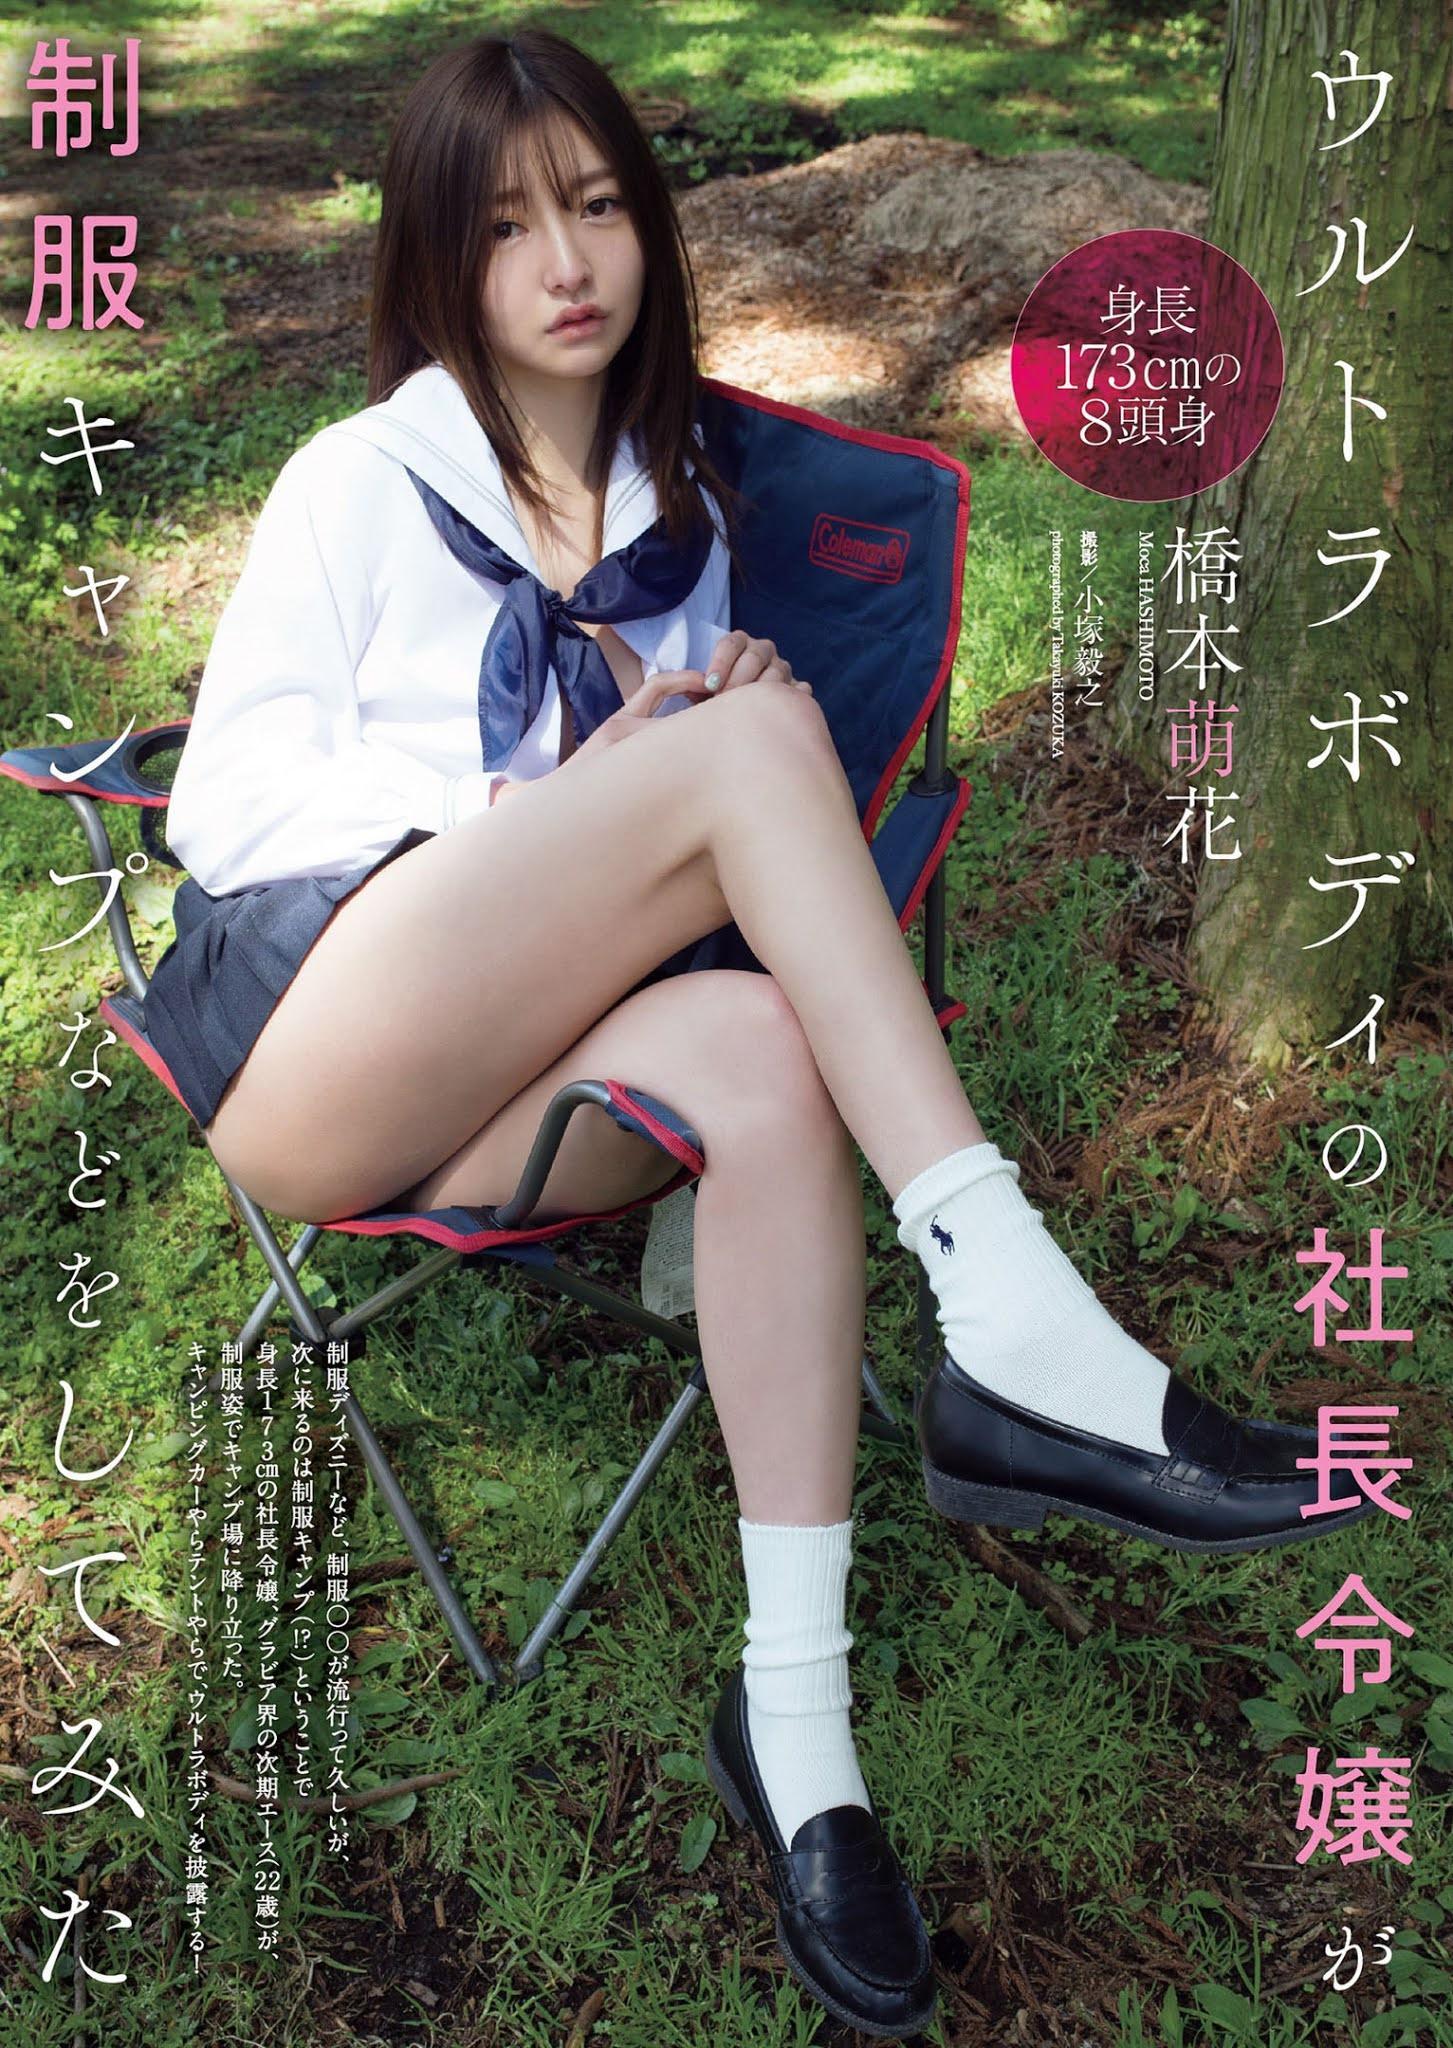 Moca Hashimoto 橋本萌花, Weekly Playboy 2021 No.19-20 (週刊プレイボーイ 2021年19-20号)(1)